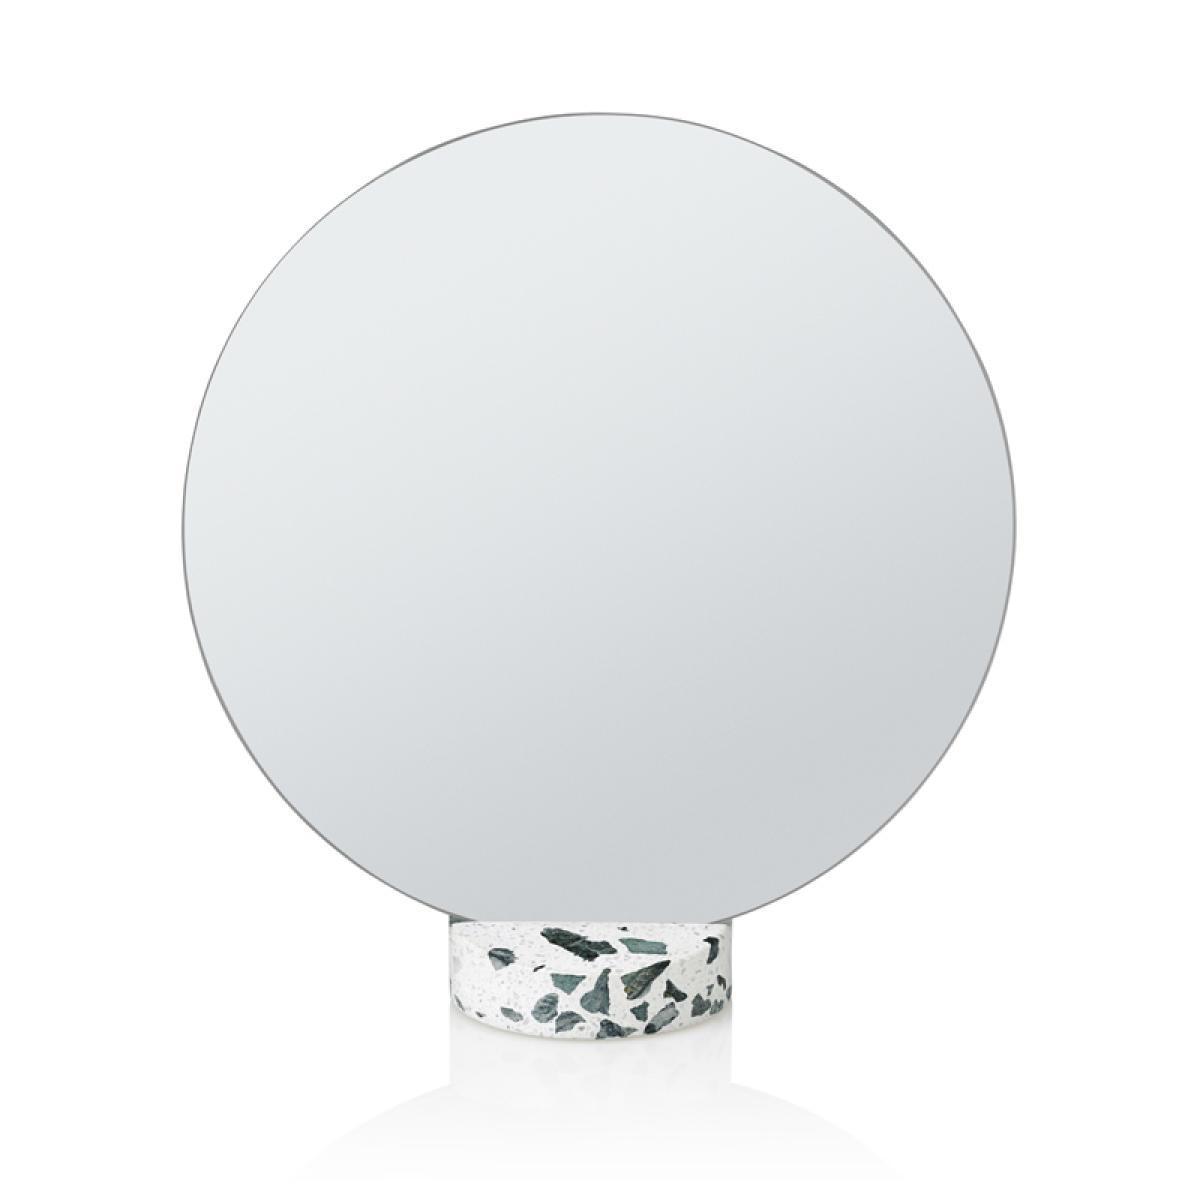 Lucie Kaas Erat miroir blanc, Ø 25cm